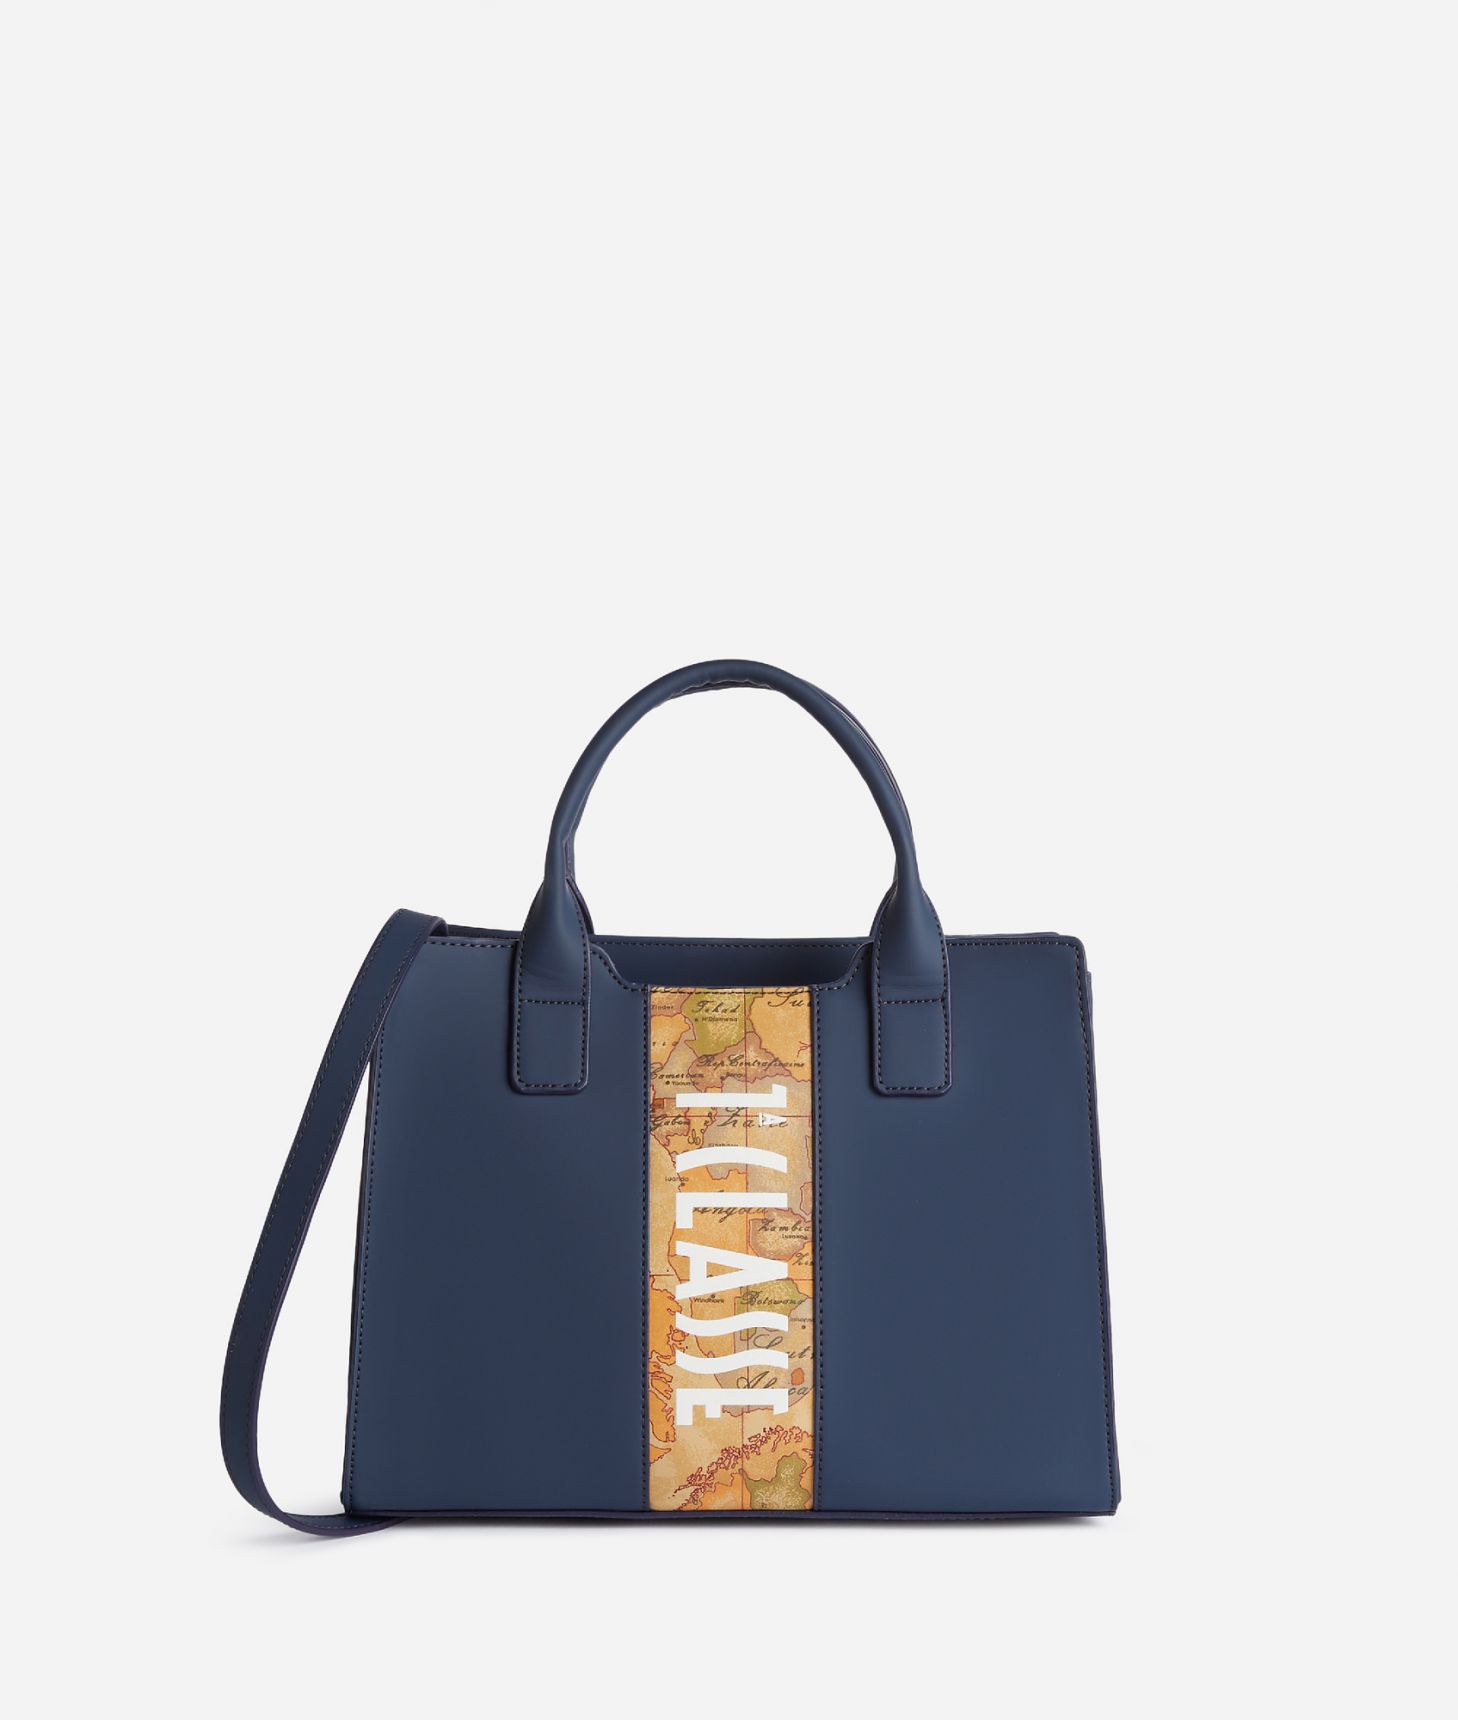 Geo Atlantis handbag with crossbody strap Navy Blue,front